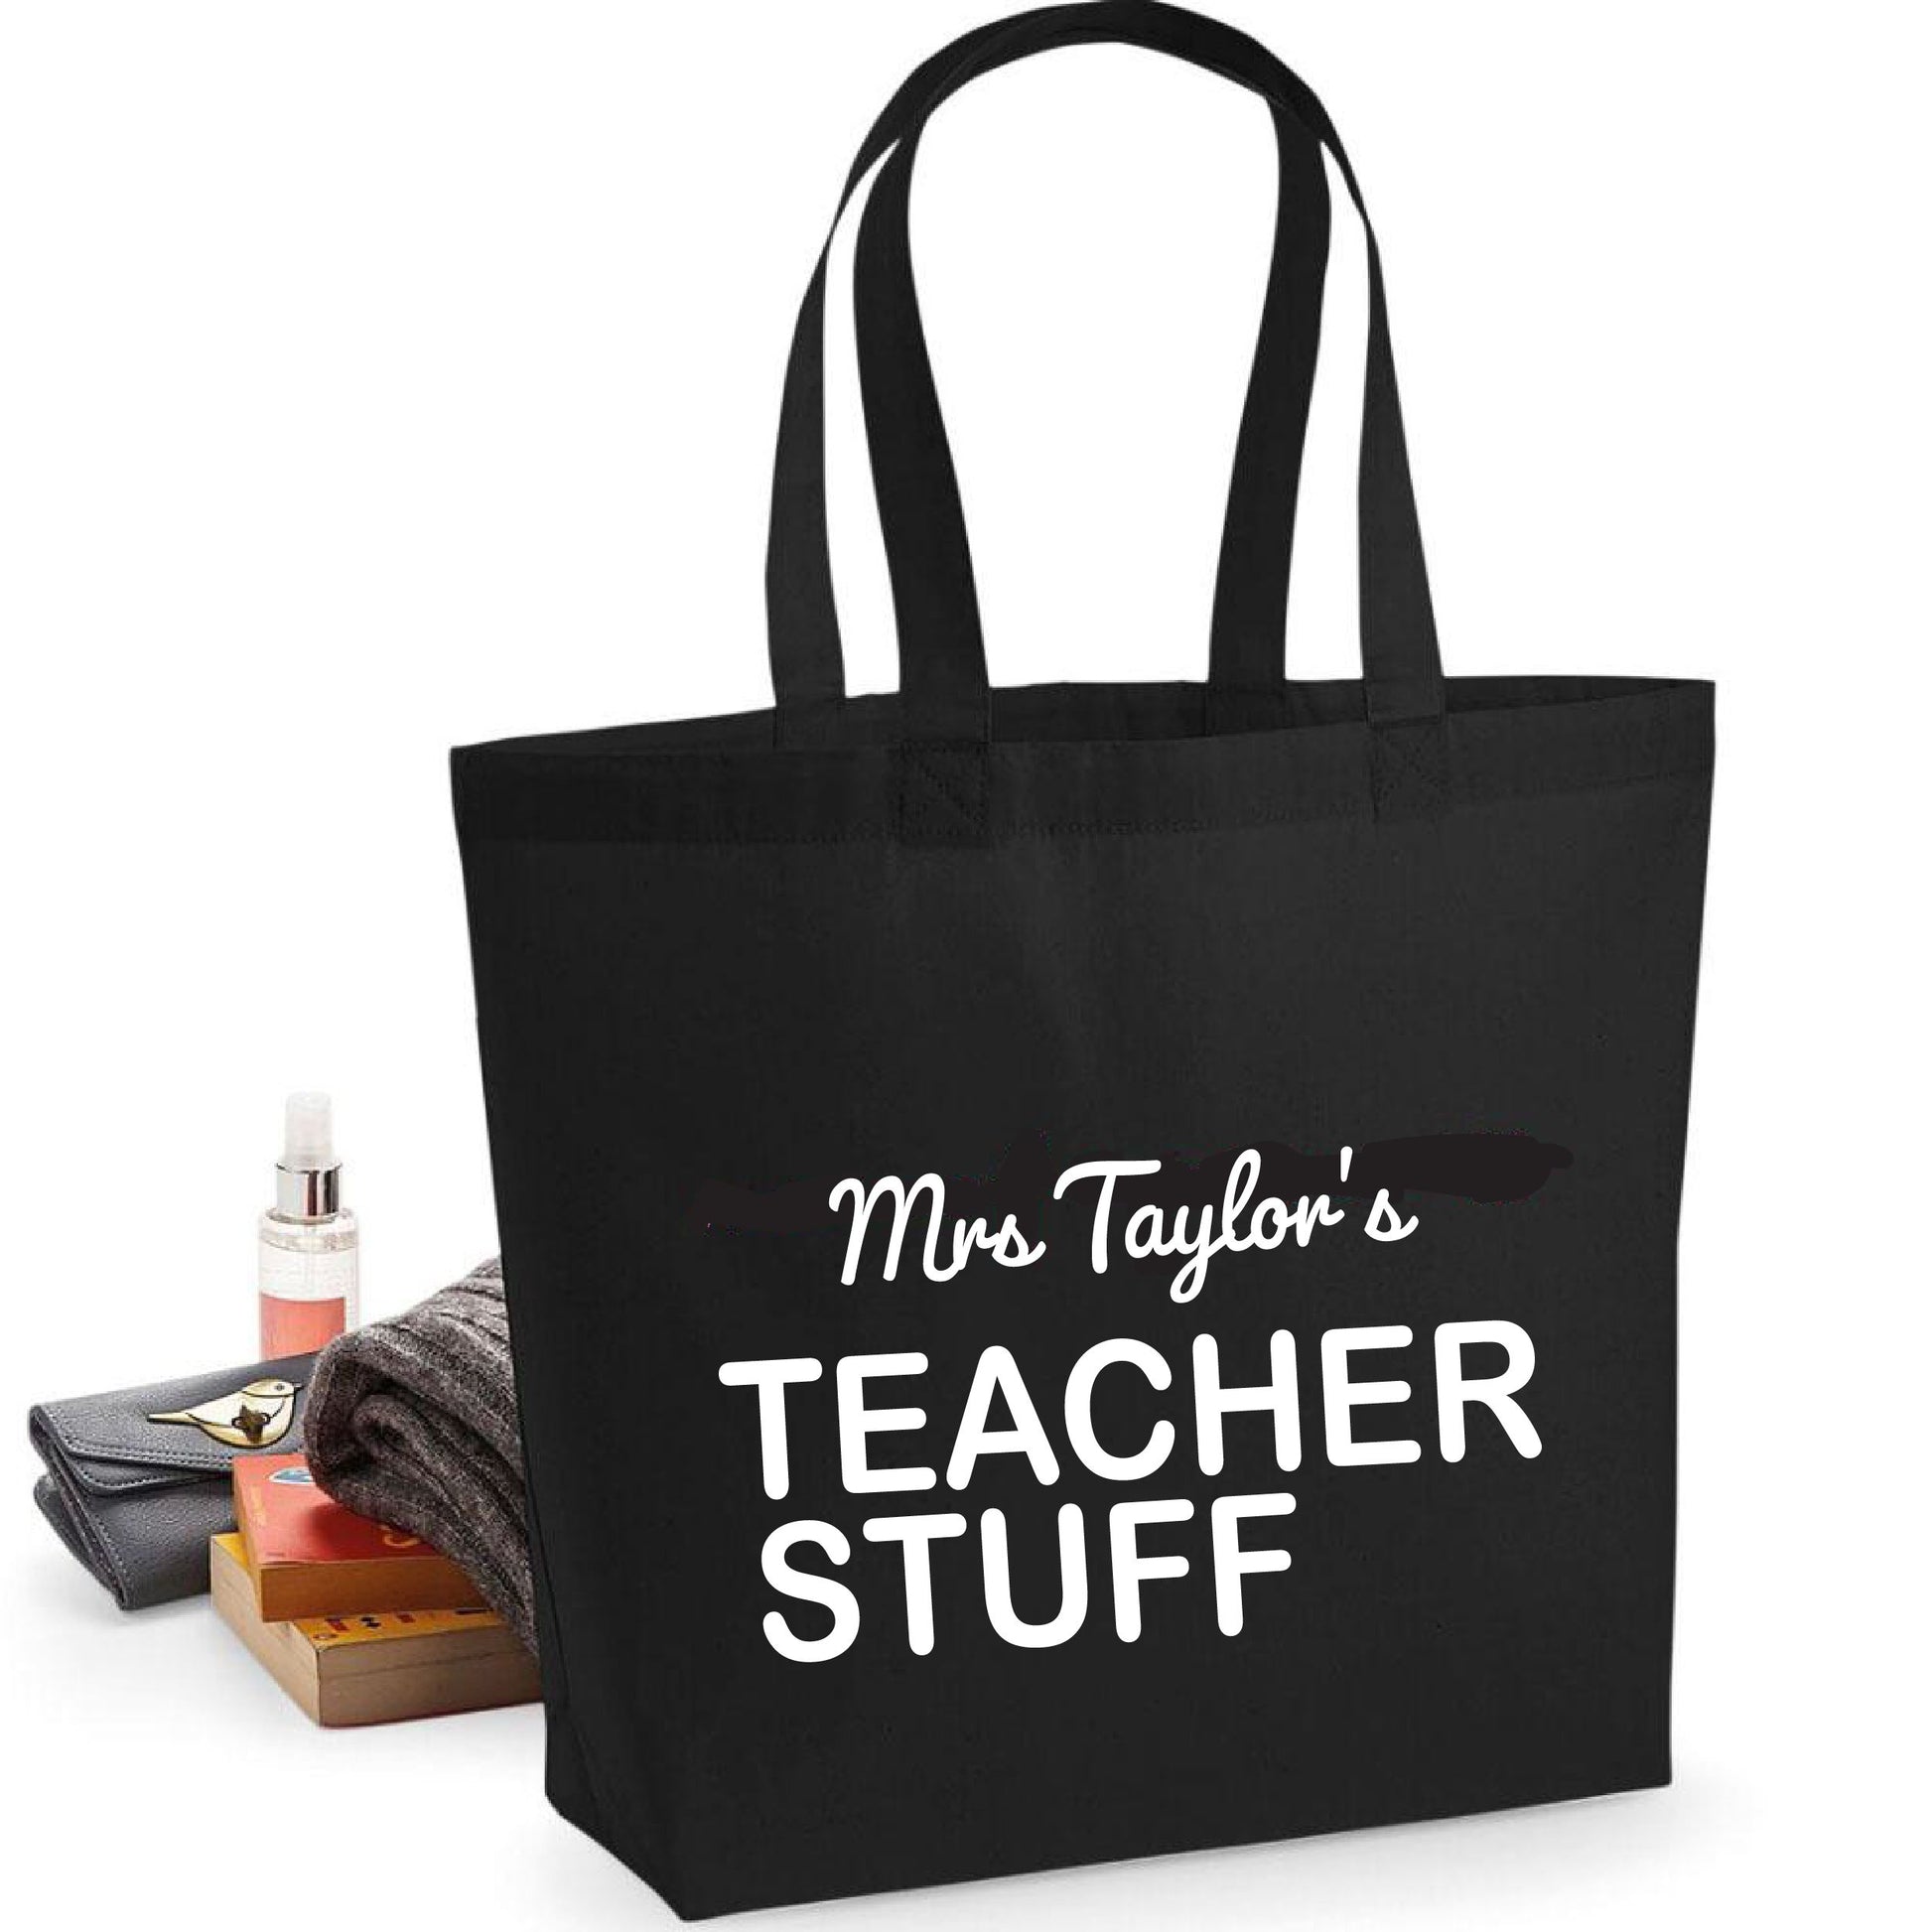 Personalised Teacher Stuff Tote Bag